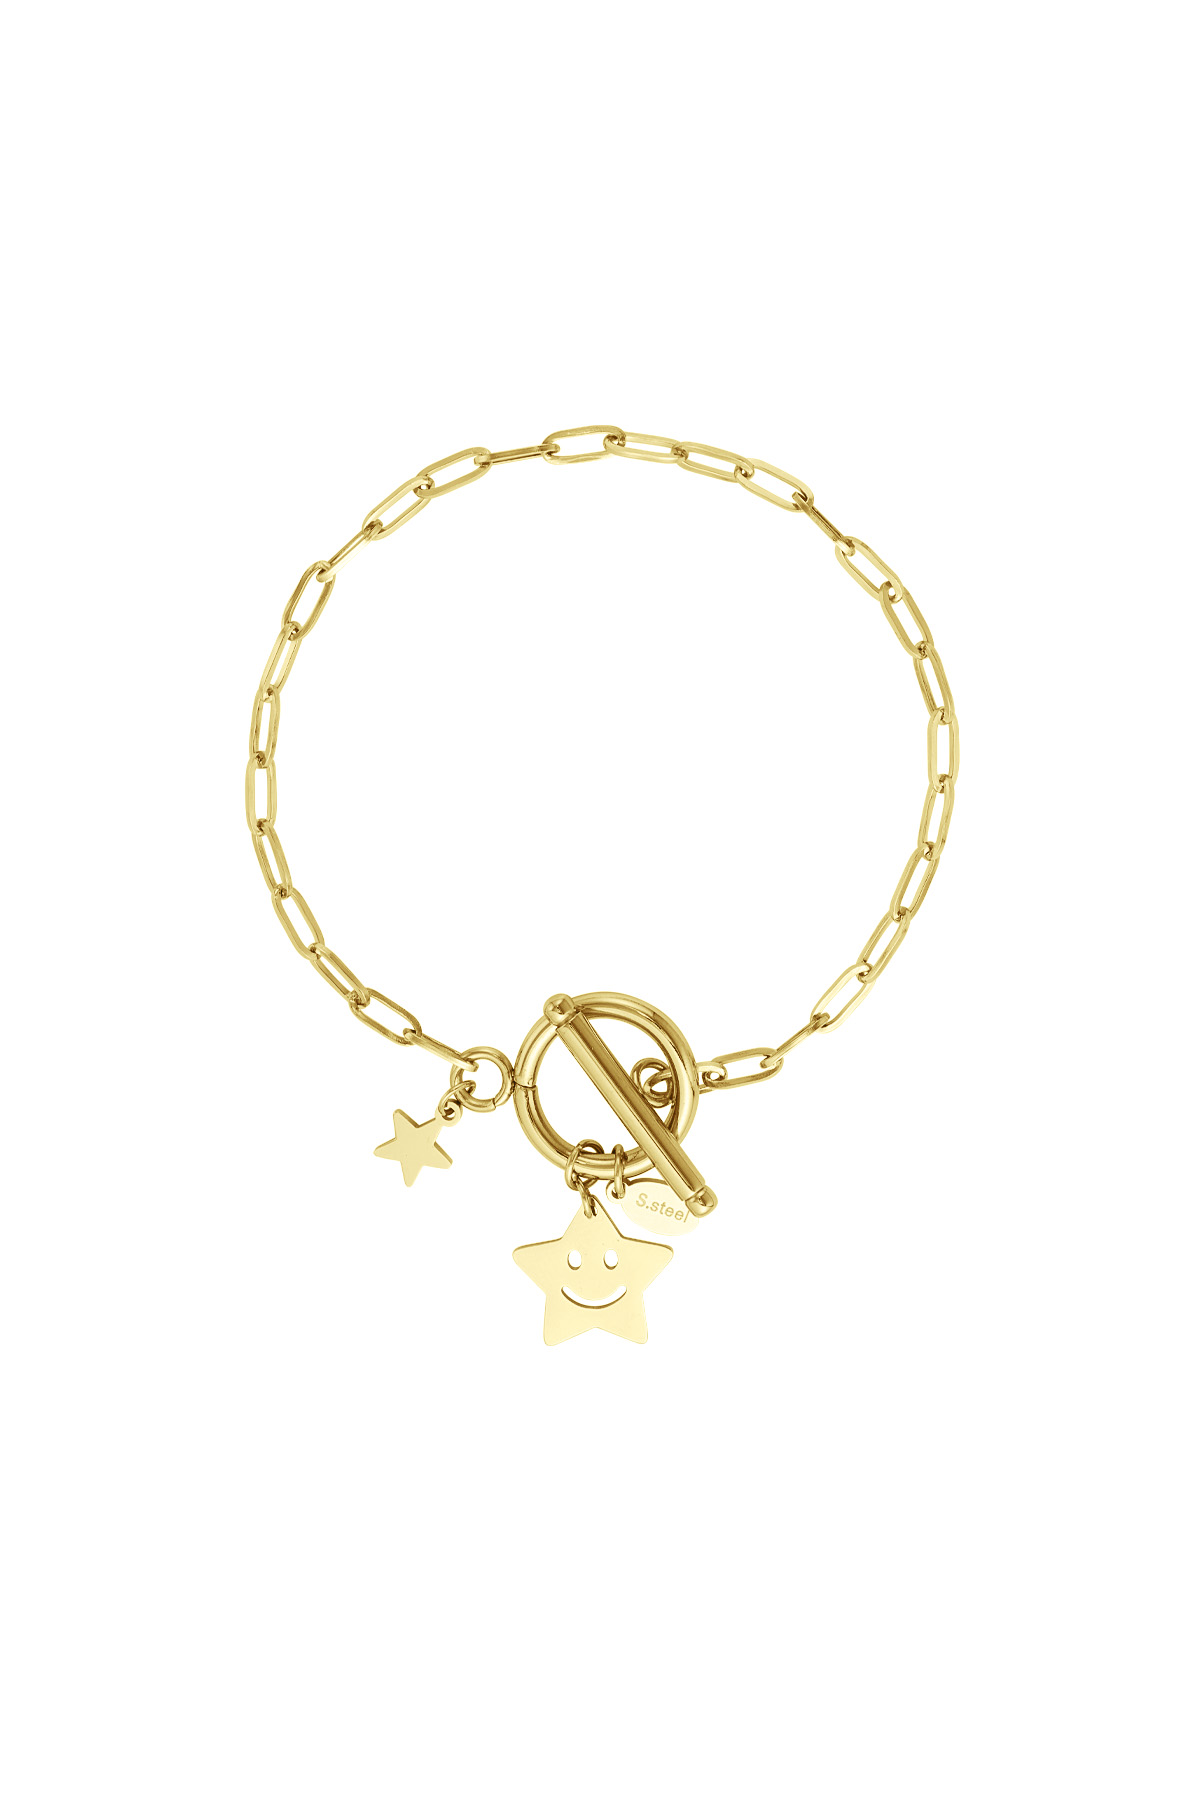 Happy star bracelet - gold  